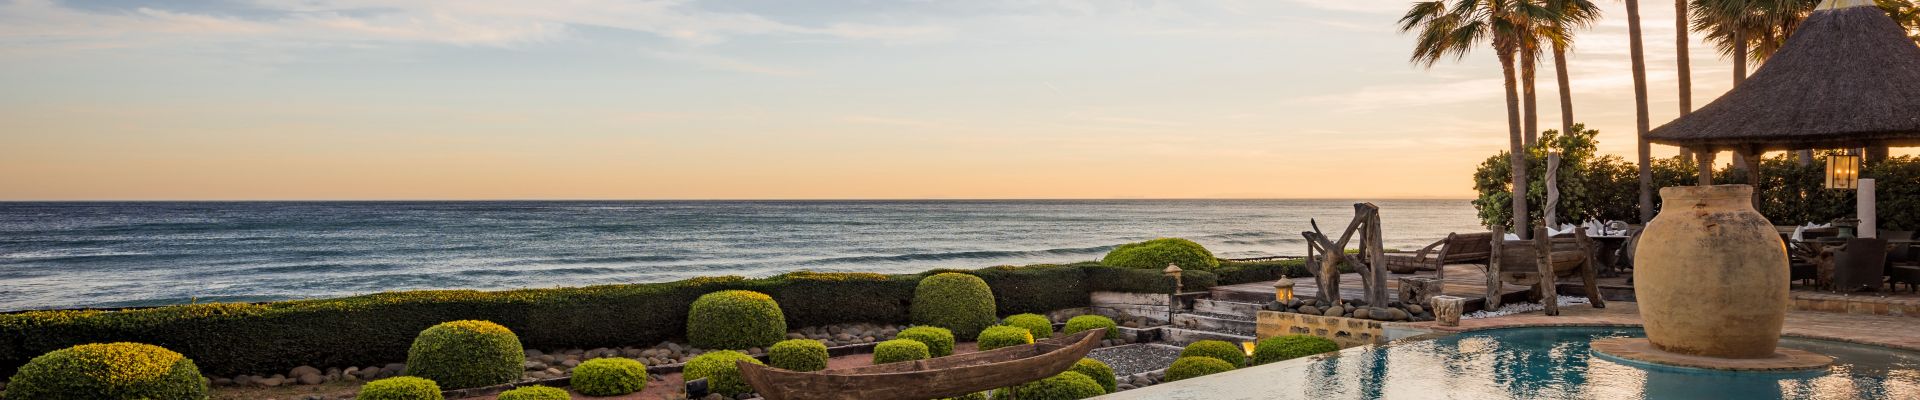 Luxury Frontline Beach Villas for Sale in Marbella